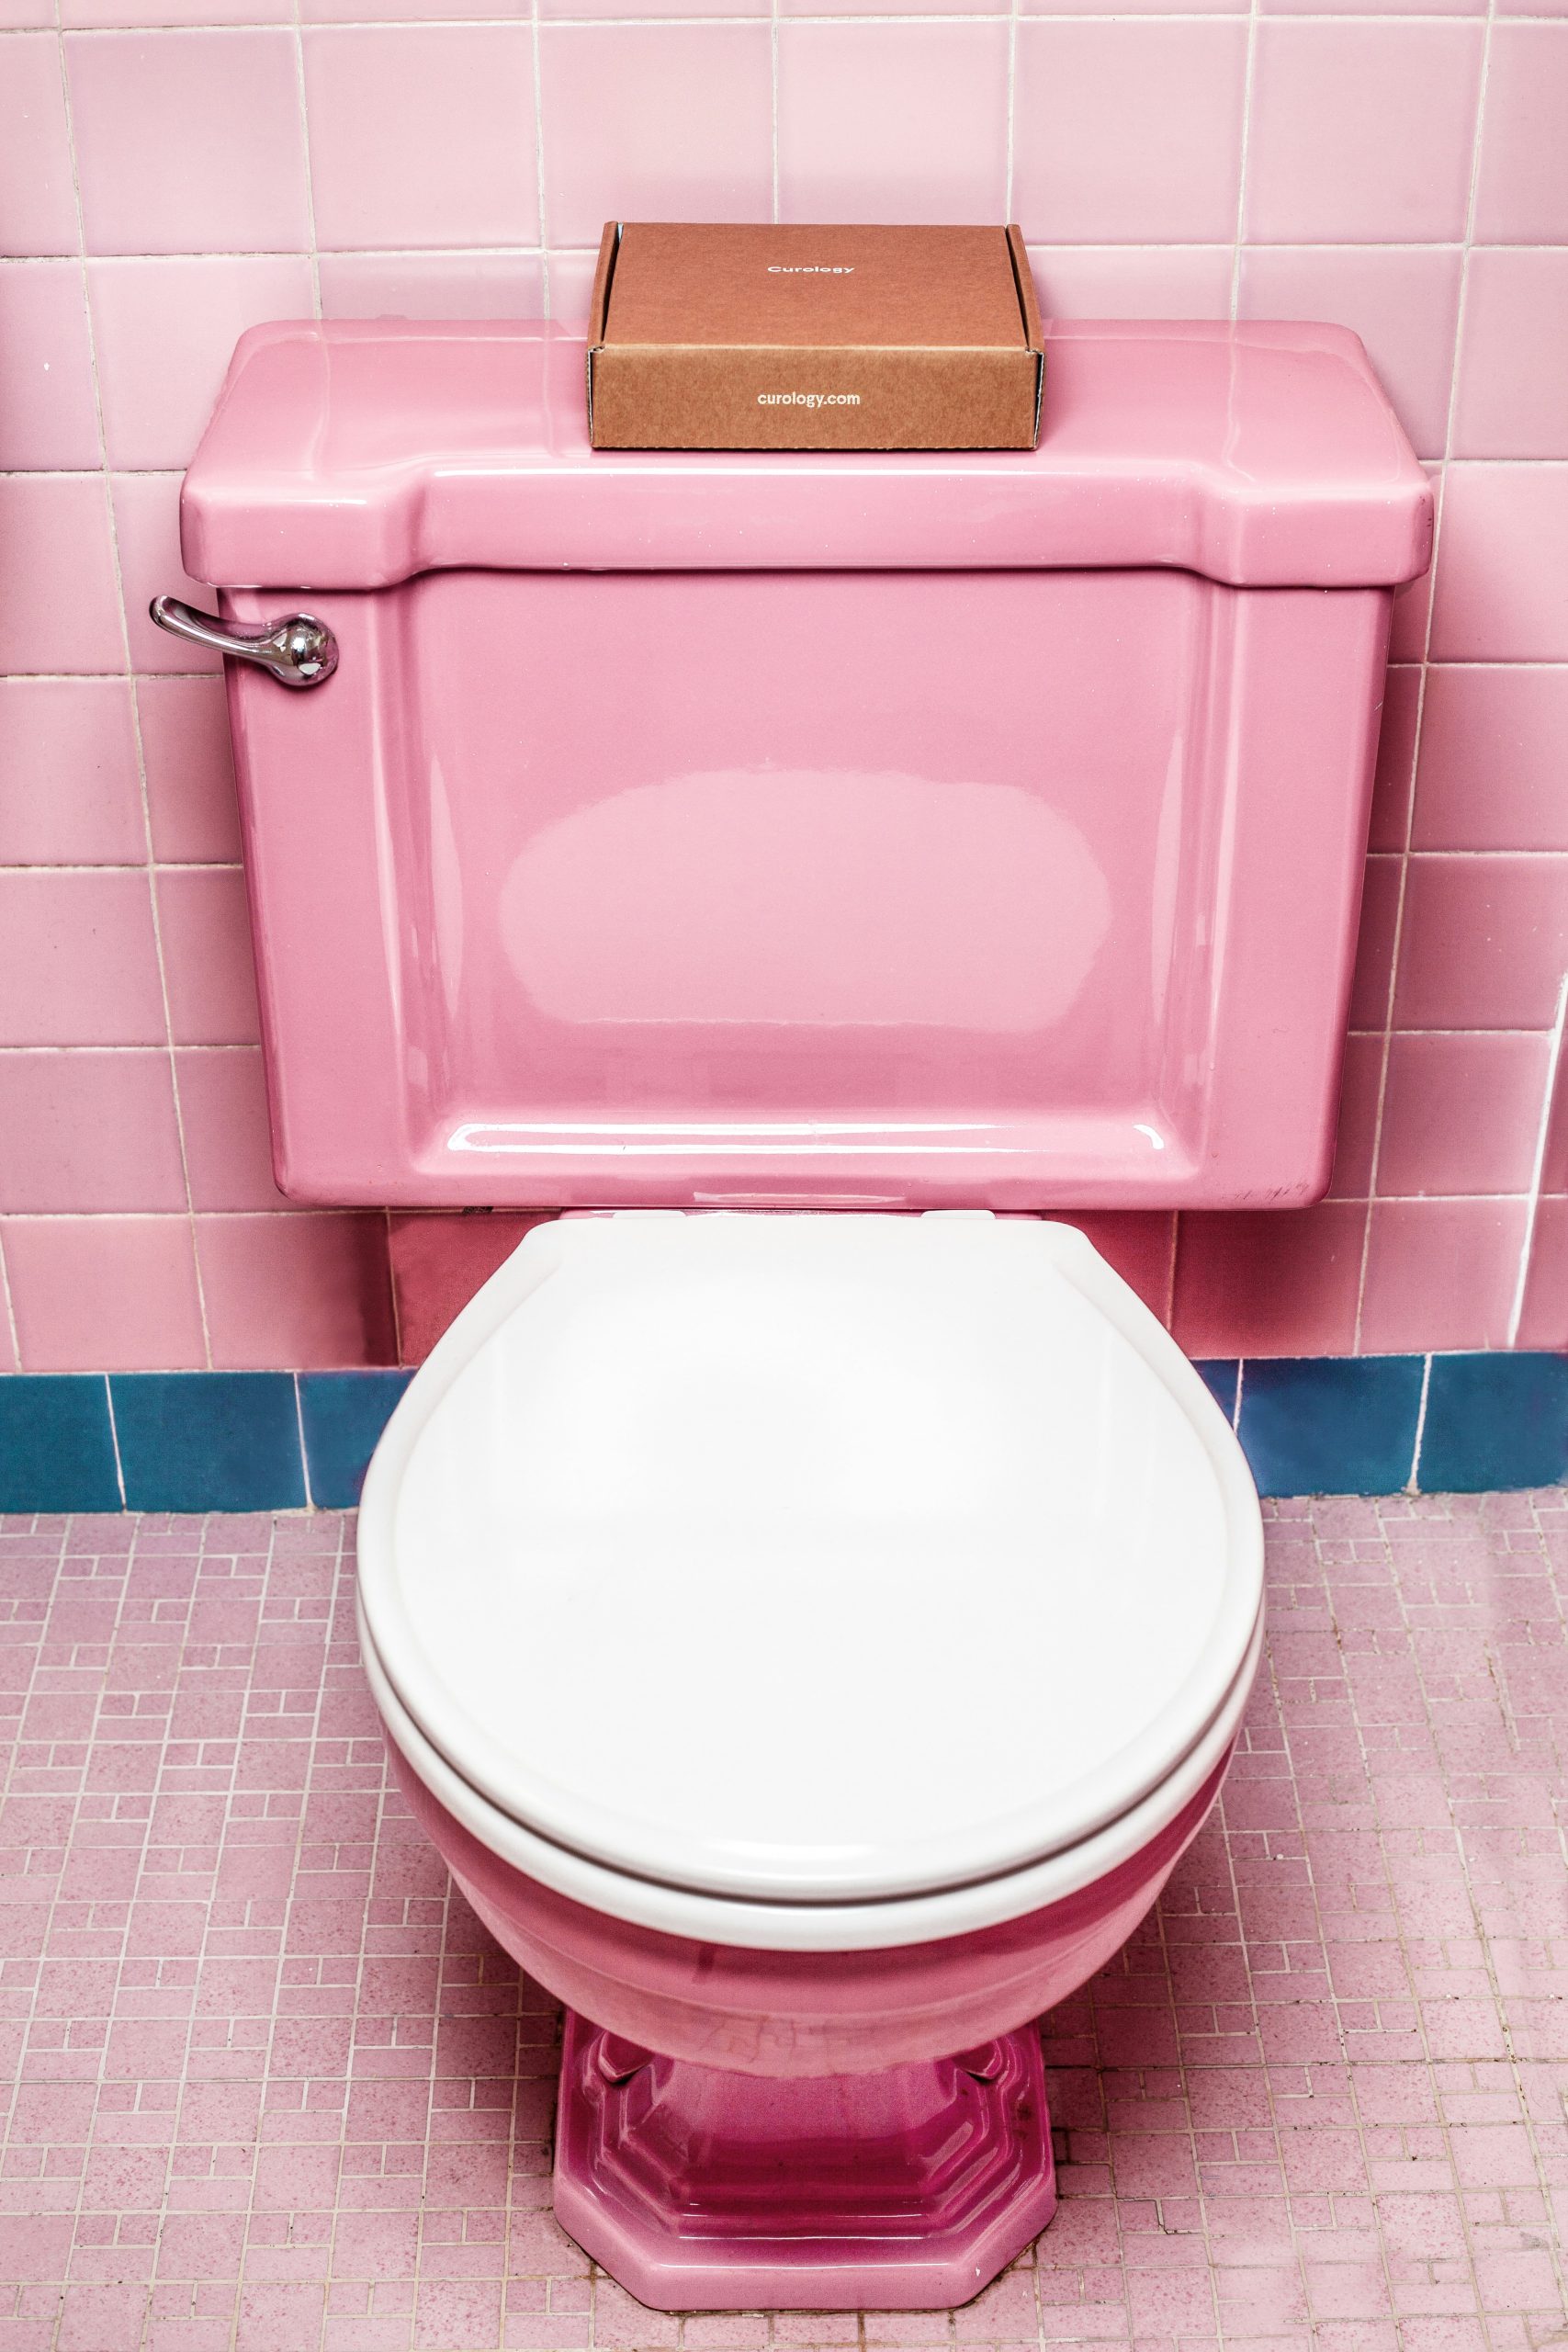 Premium Square Smart Toilet review